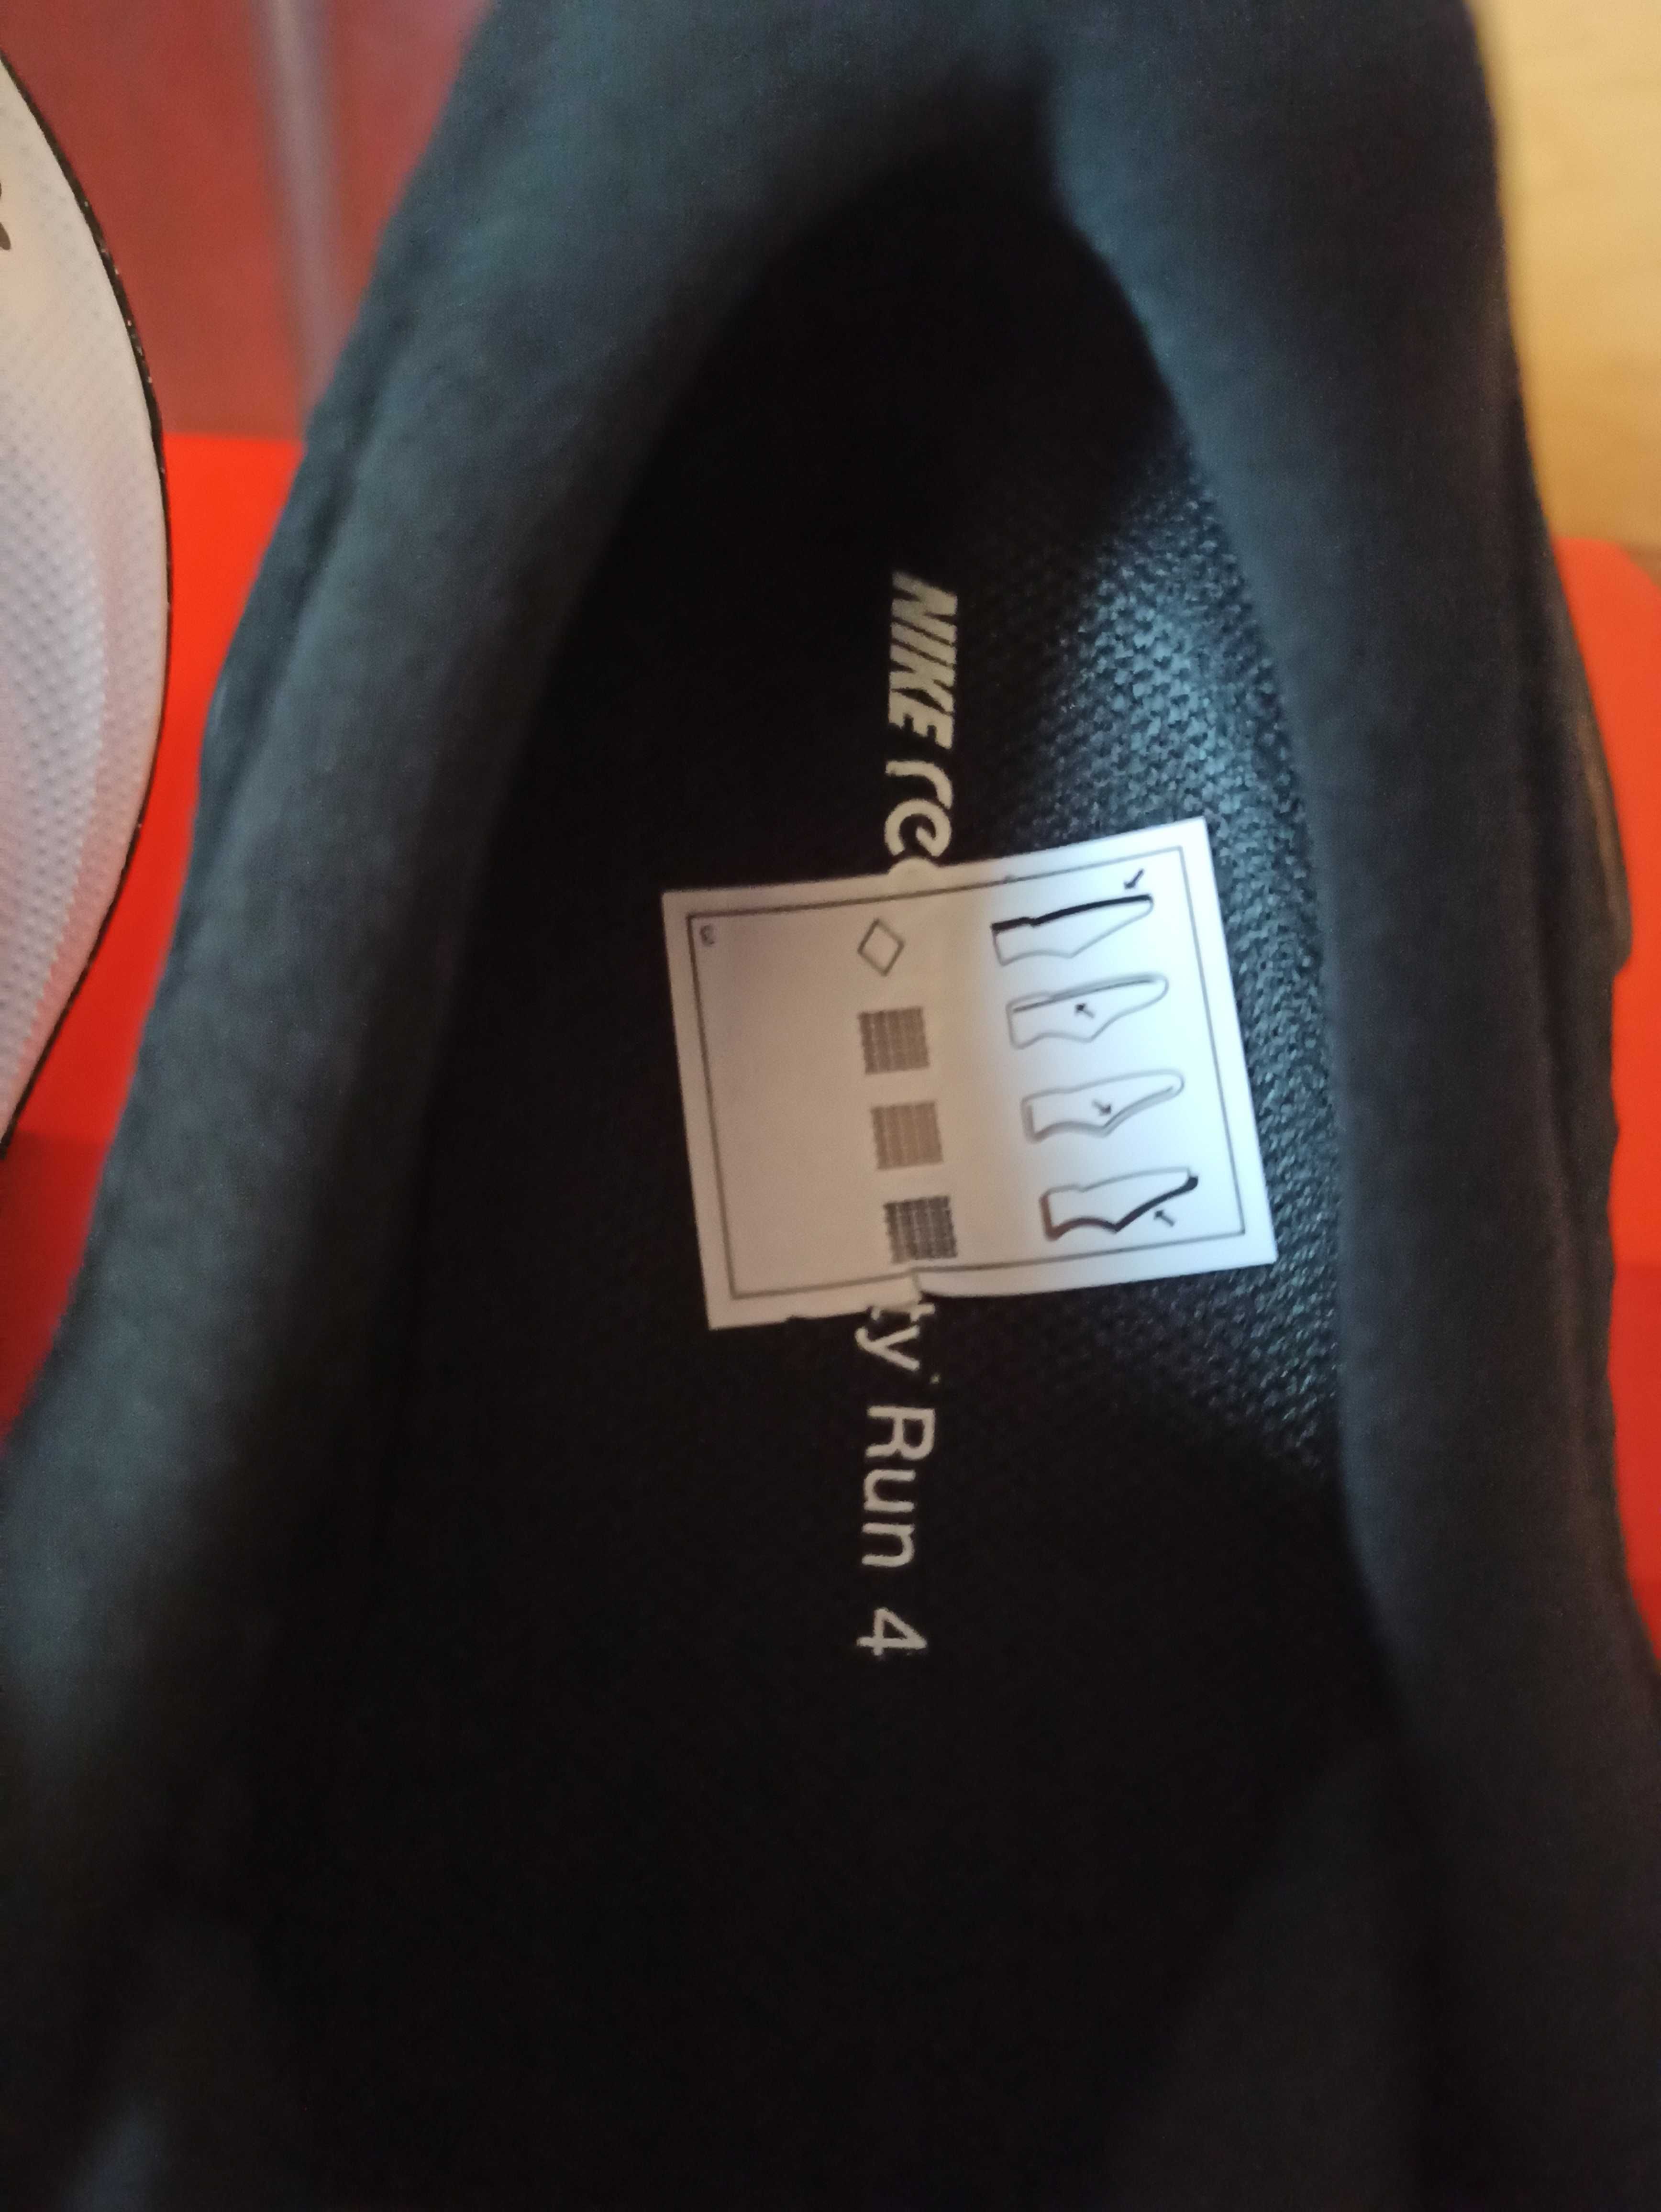 (r. Eur 45) Nike ReactX Infinity Run 4 Black White DR2665,-001